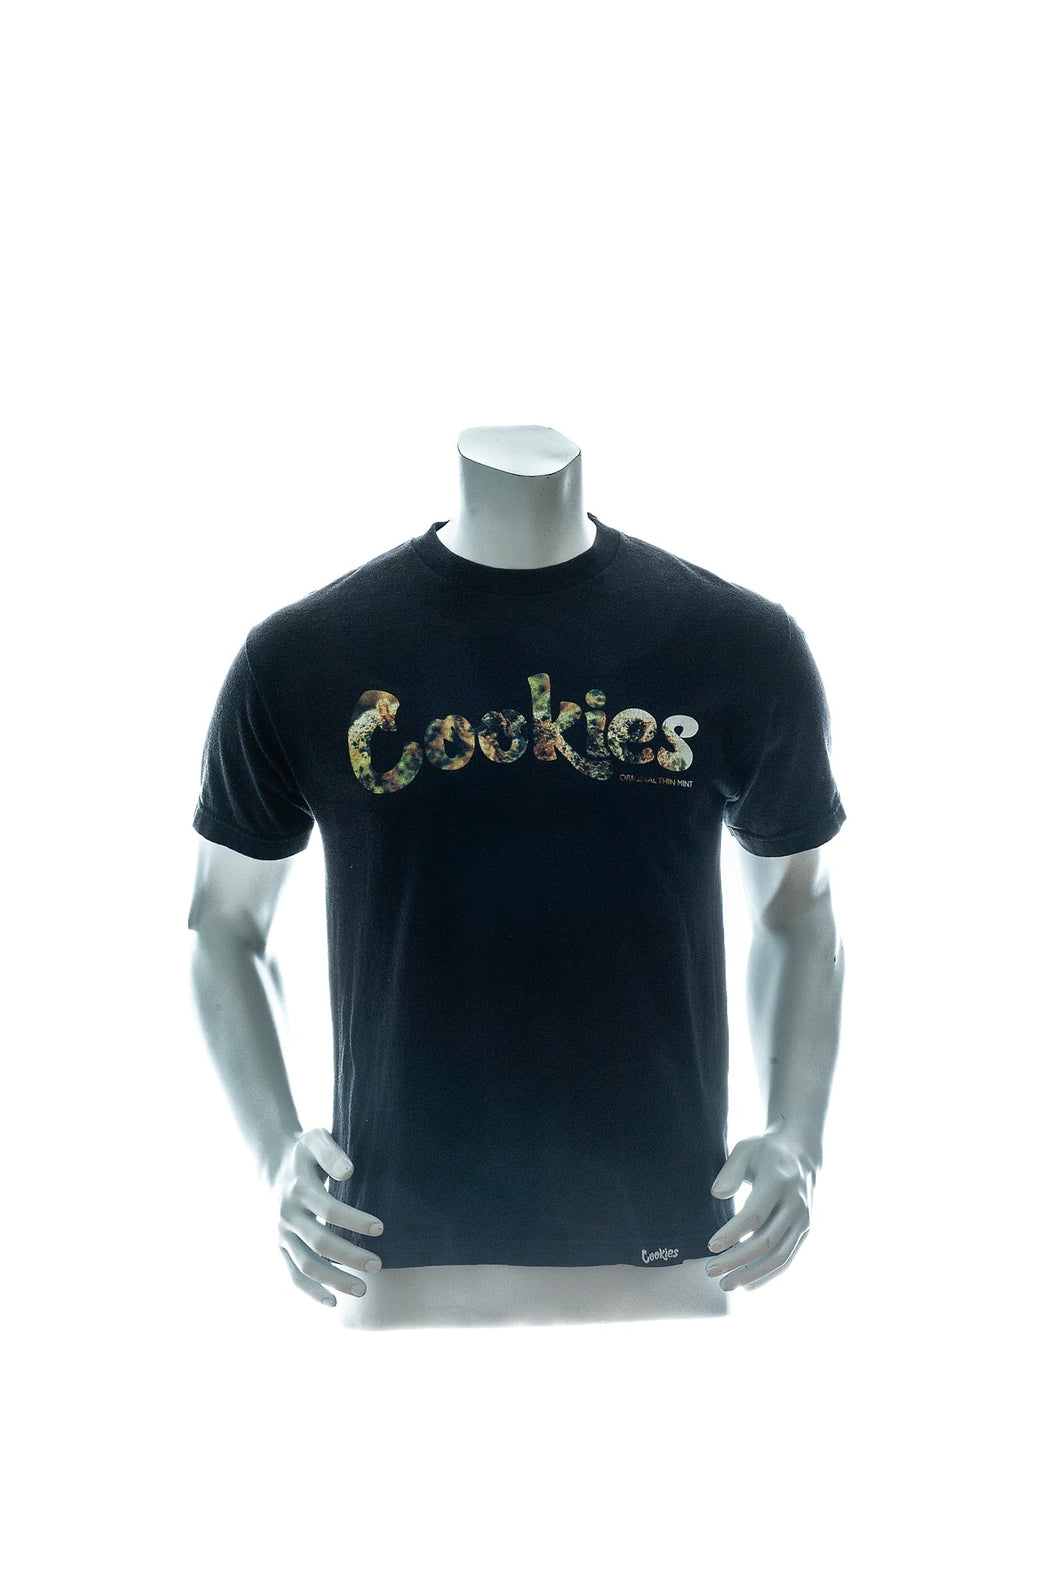 Cookies Original Thin Mint T-Shirt Mens Medium